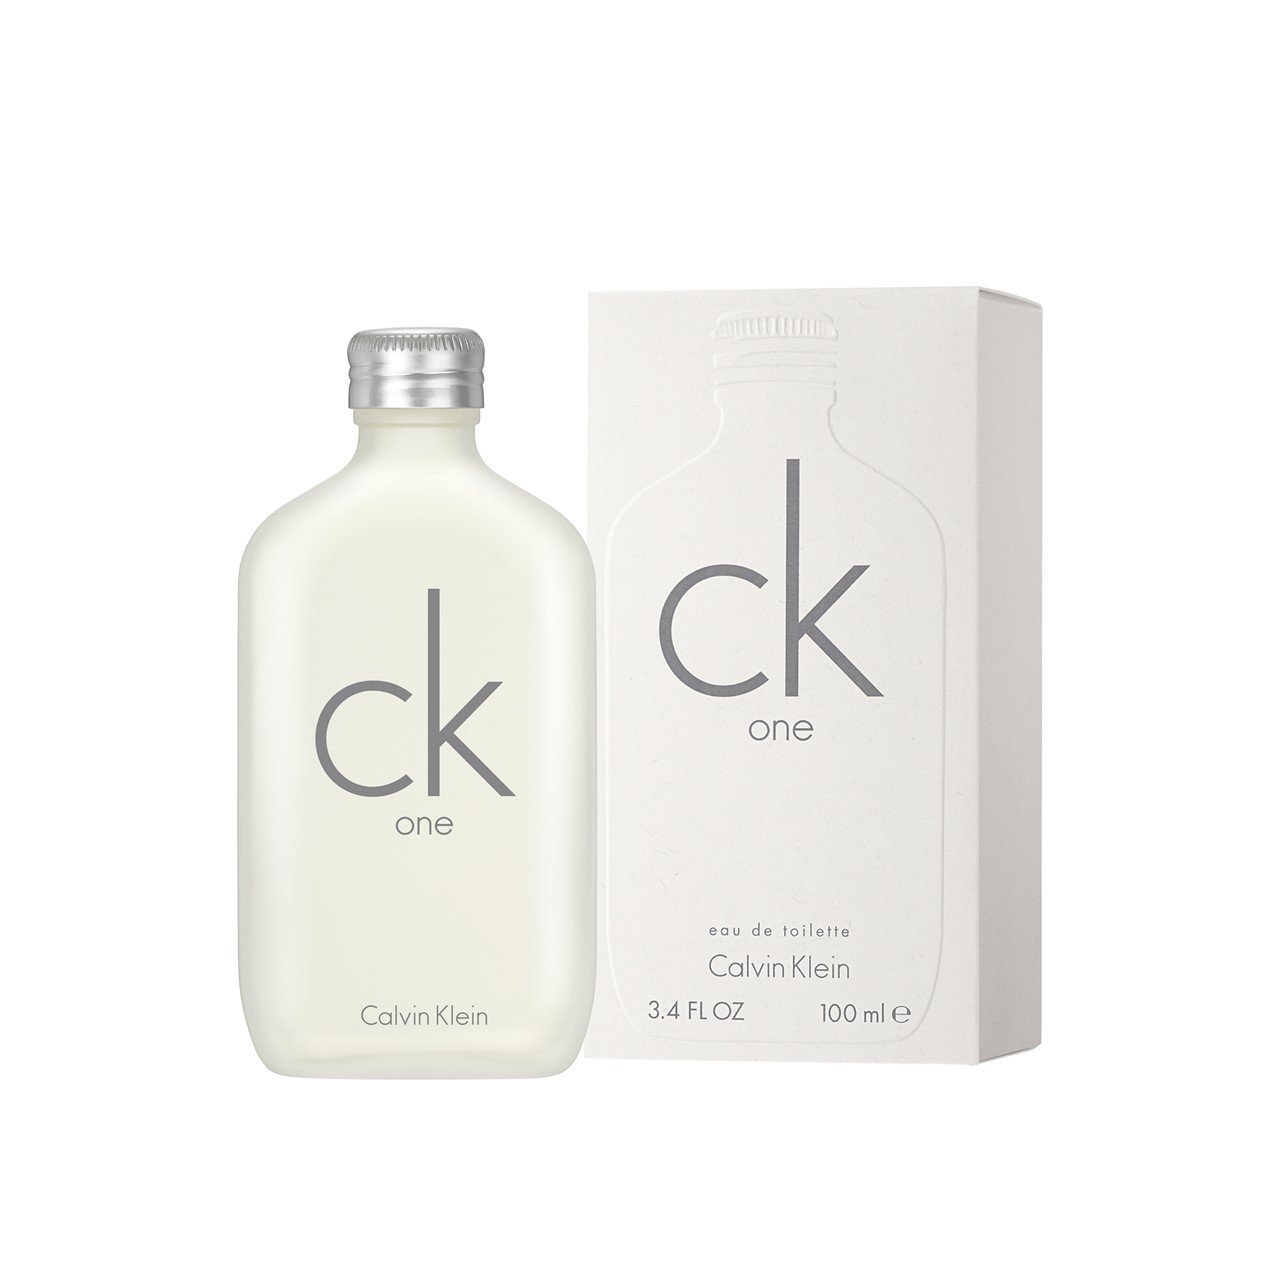 Calvin Klein One Eau De Toilette Spray - 3.4 fl oz bottle